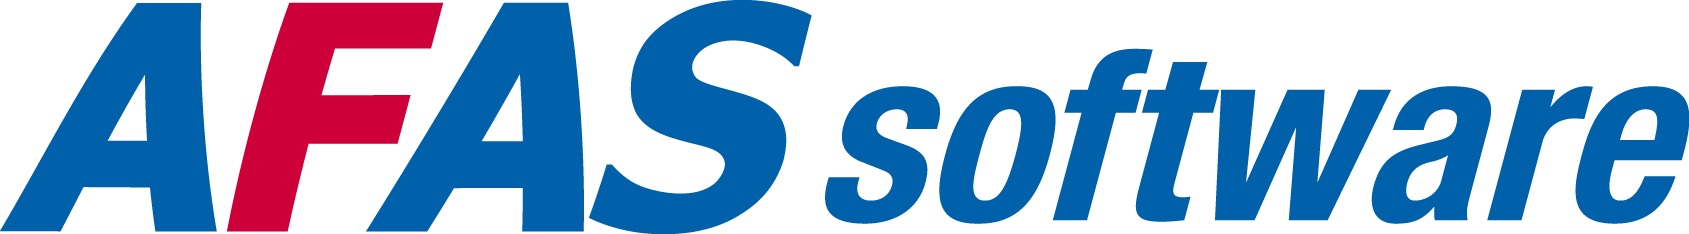 AFAS software logo